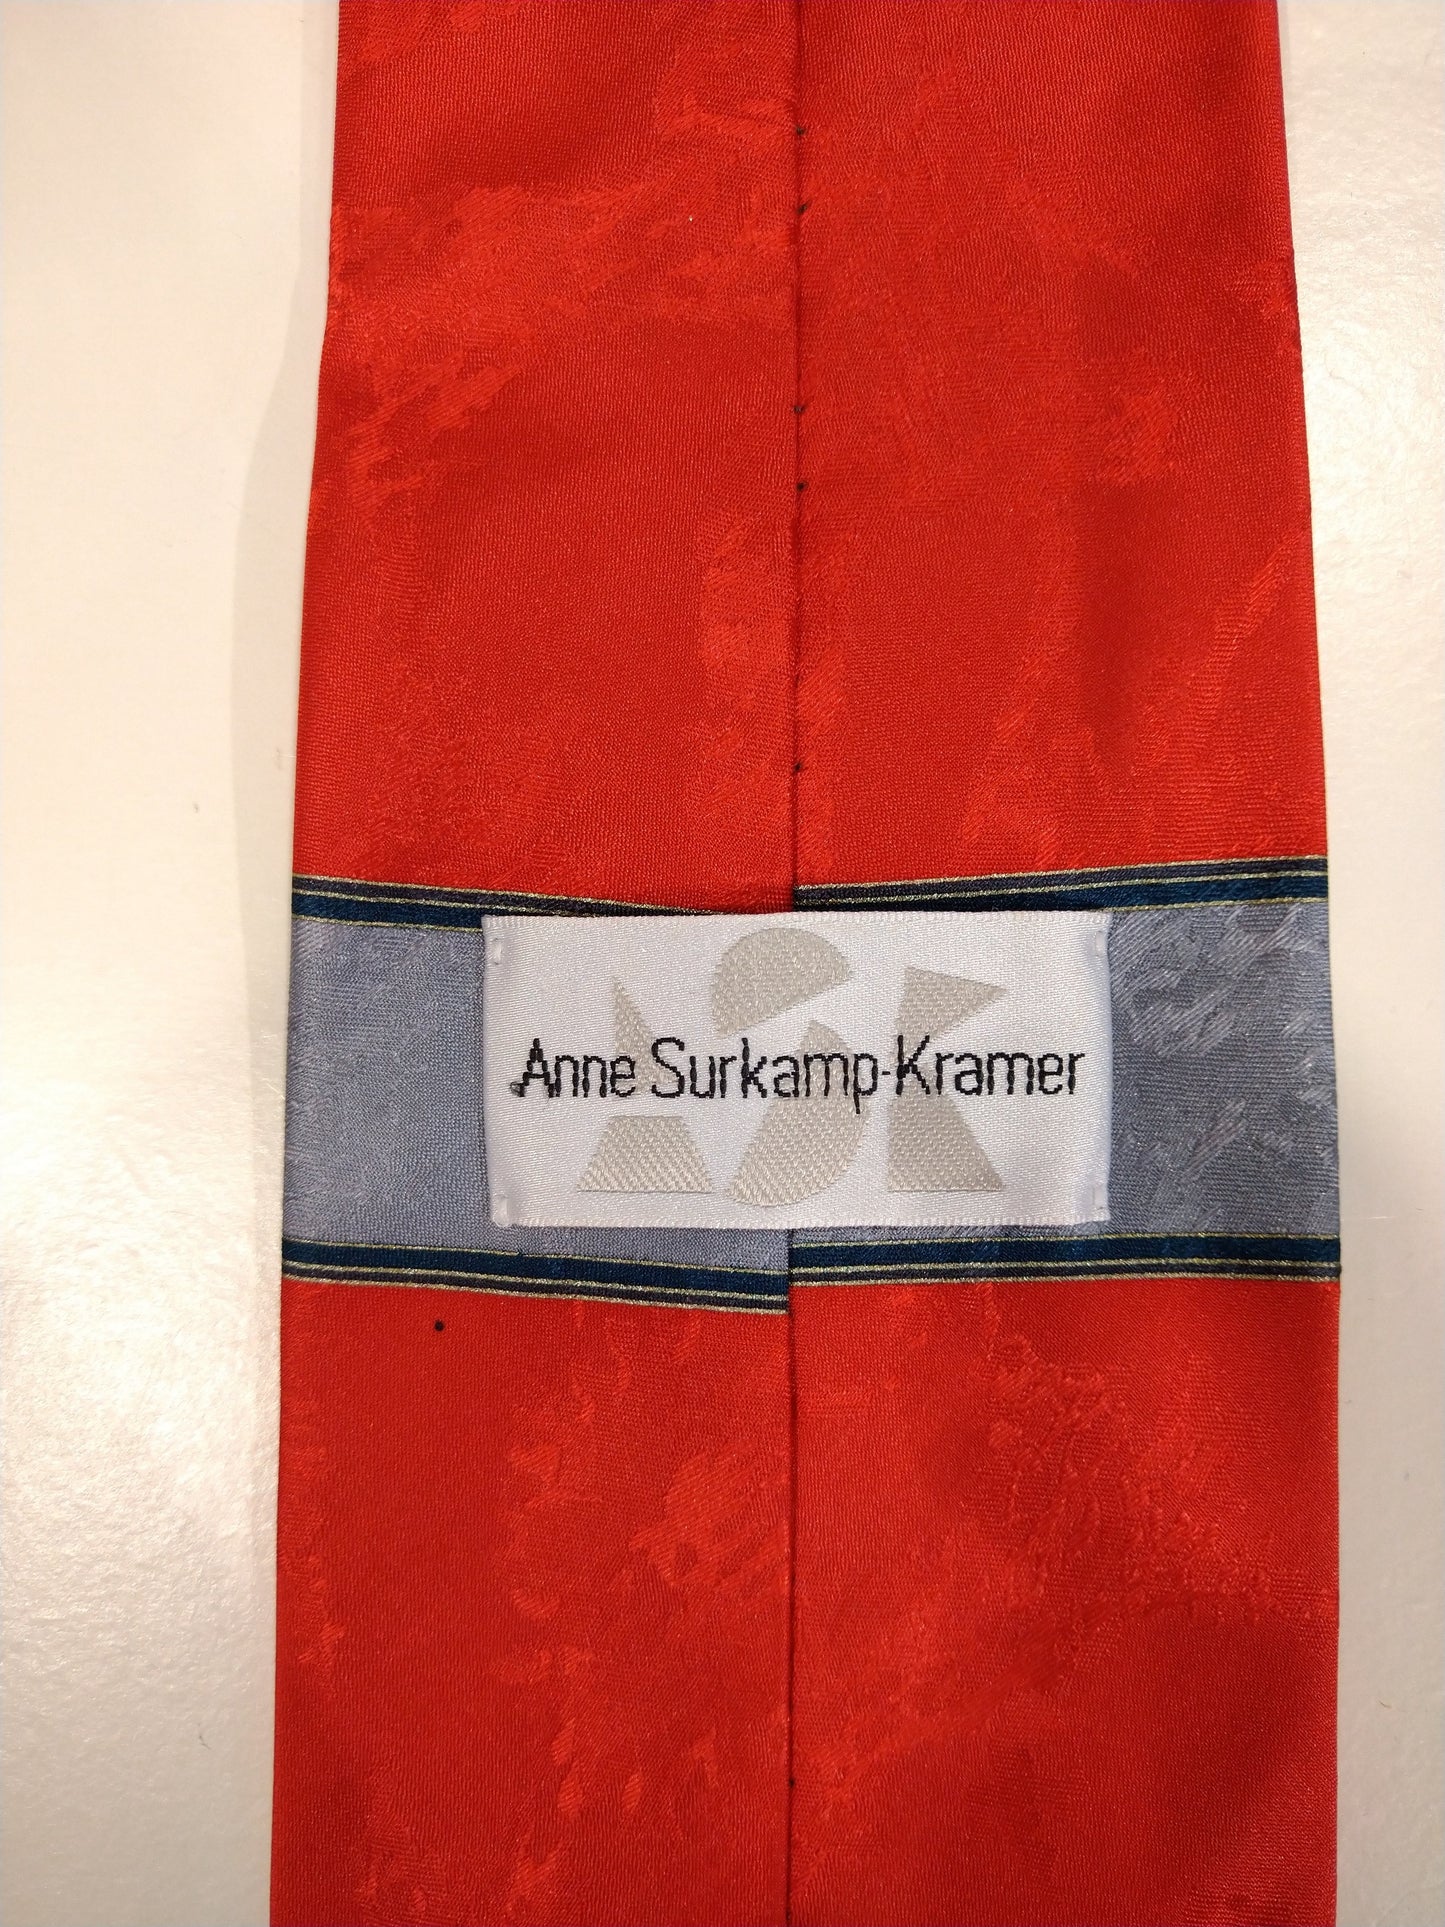 Vintage Anne Surkamp Kramer Silk Tie. Bonito motivo vintage.